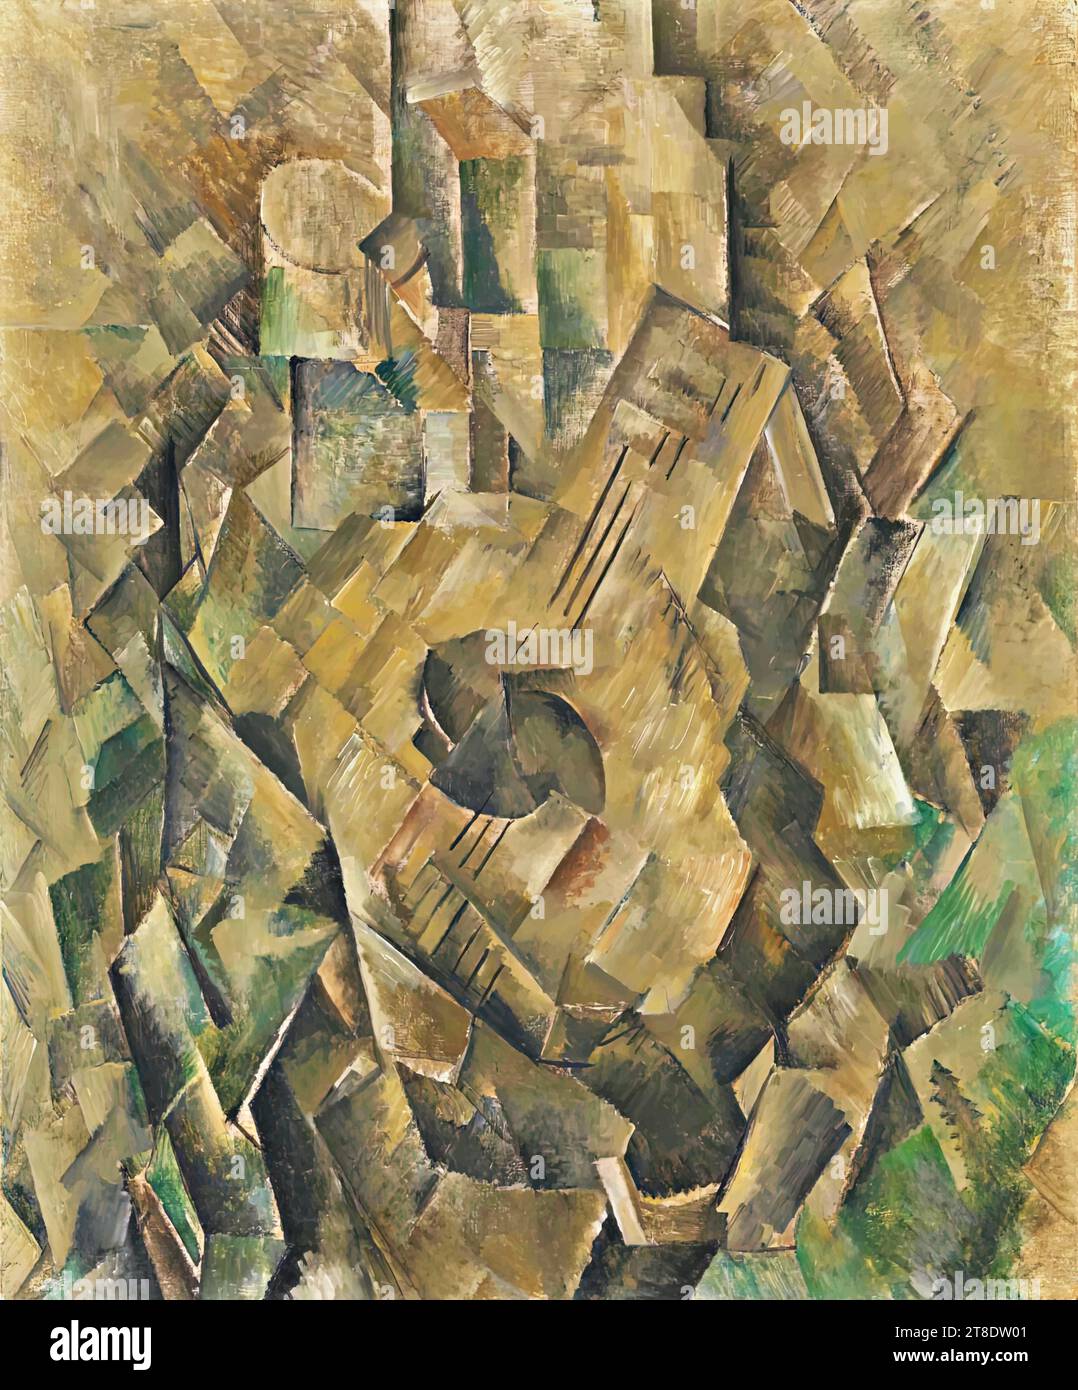 "The Mandolin, c. 1909-10 (olio su tela) artista di Braque, Georges (1882-1963) / francese." Illustrazione Vettoriale